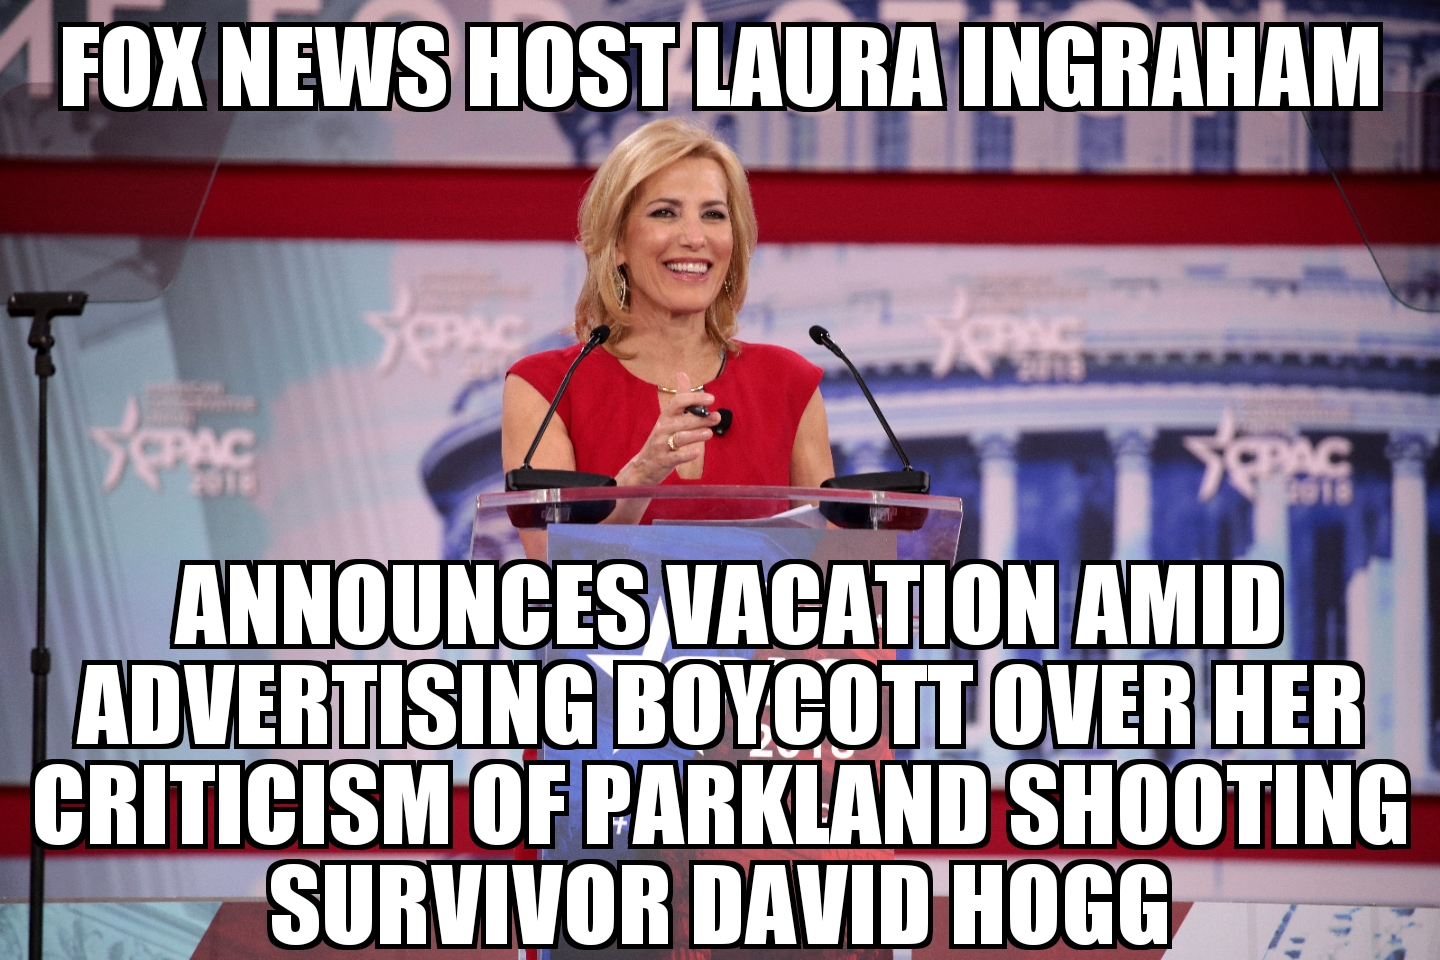 Laura Ingraham announces vacation amid advertising boycott